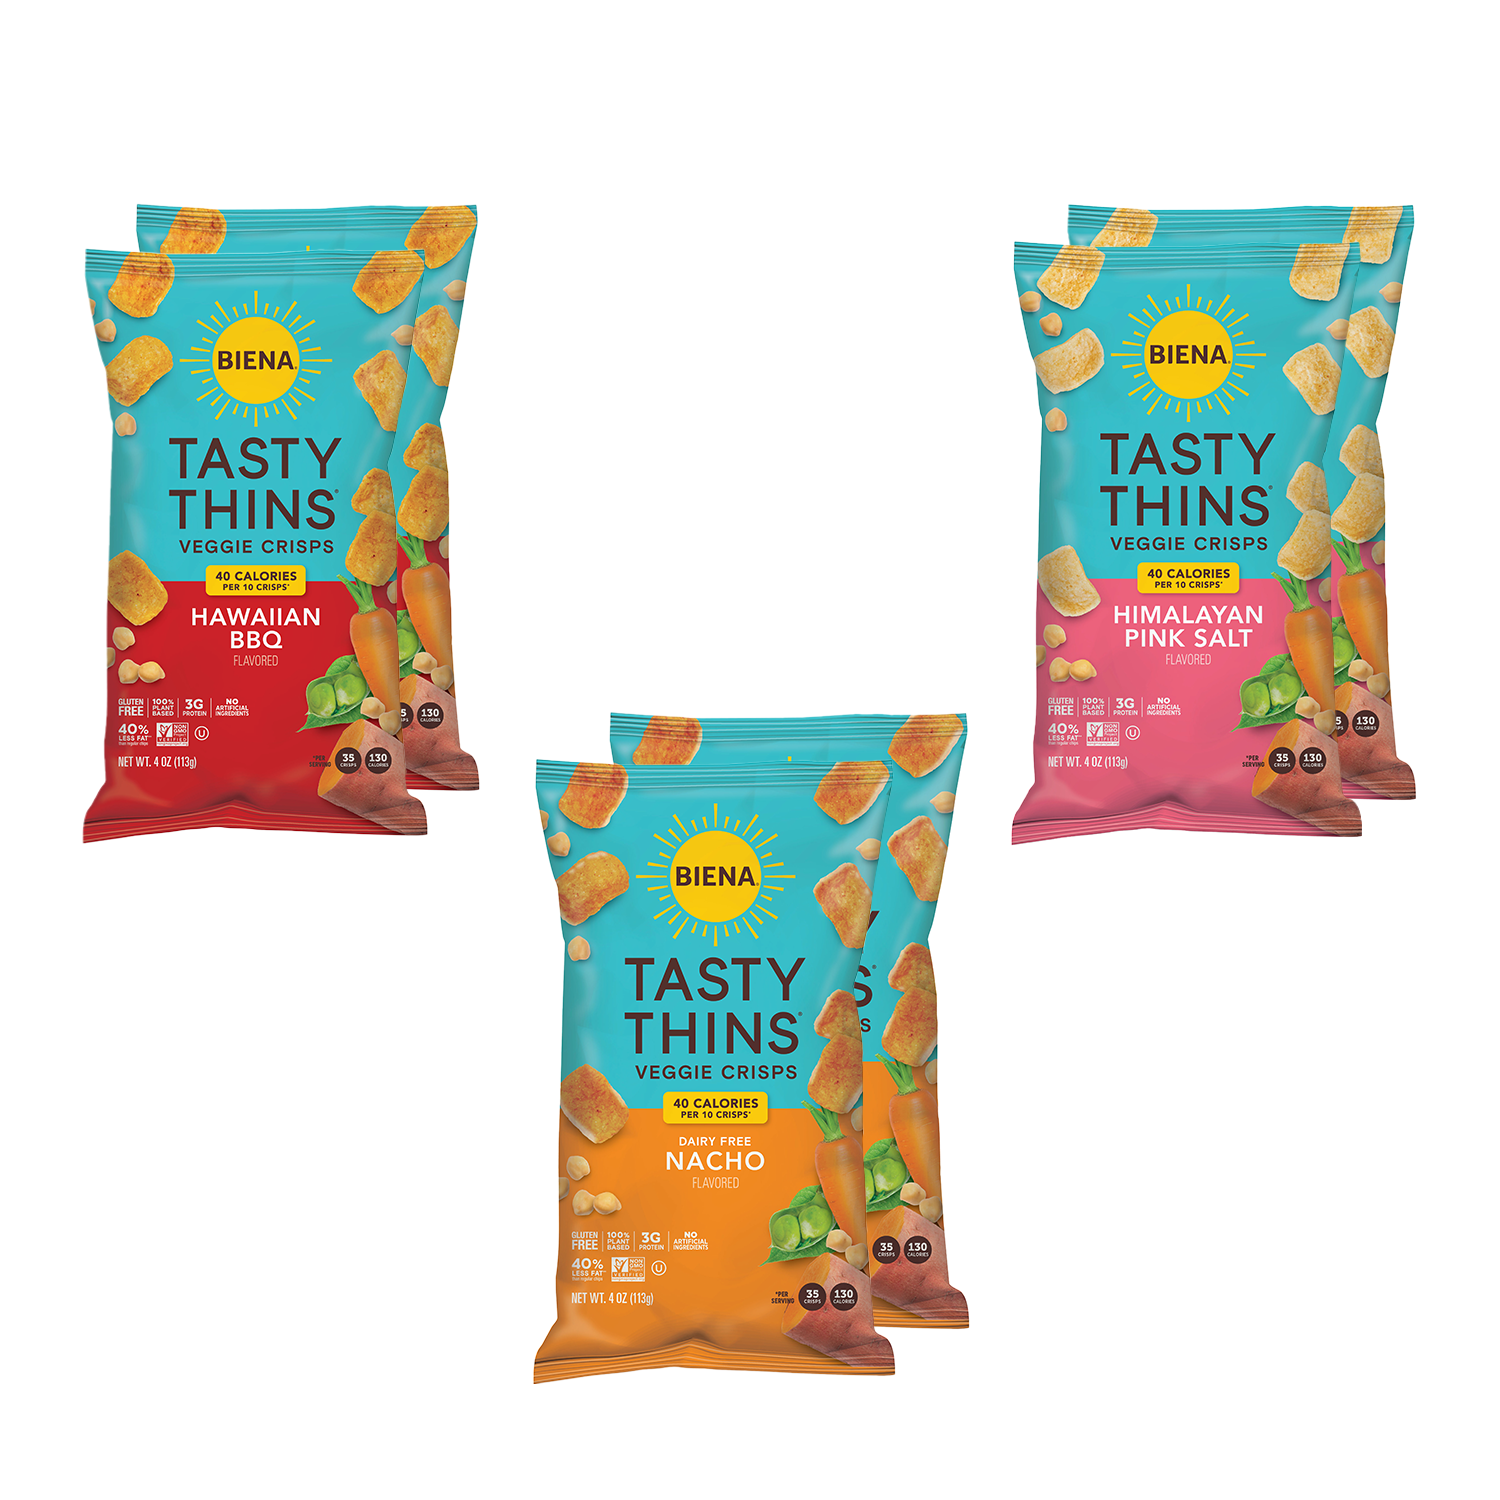 Three bags of Tasty Thins